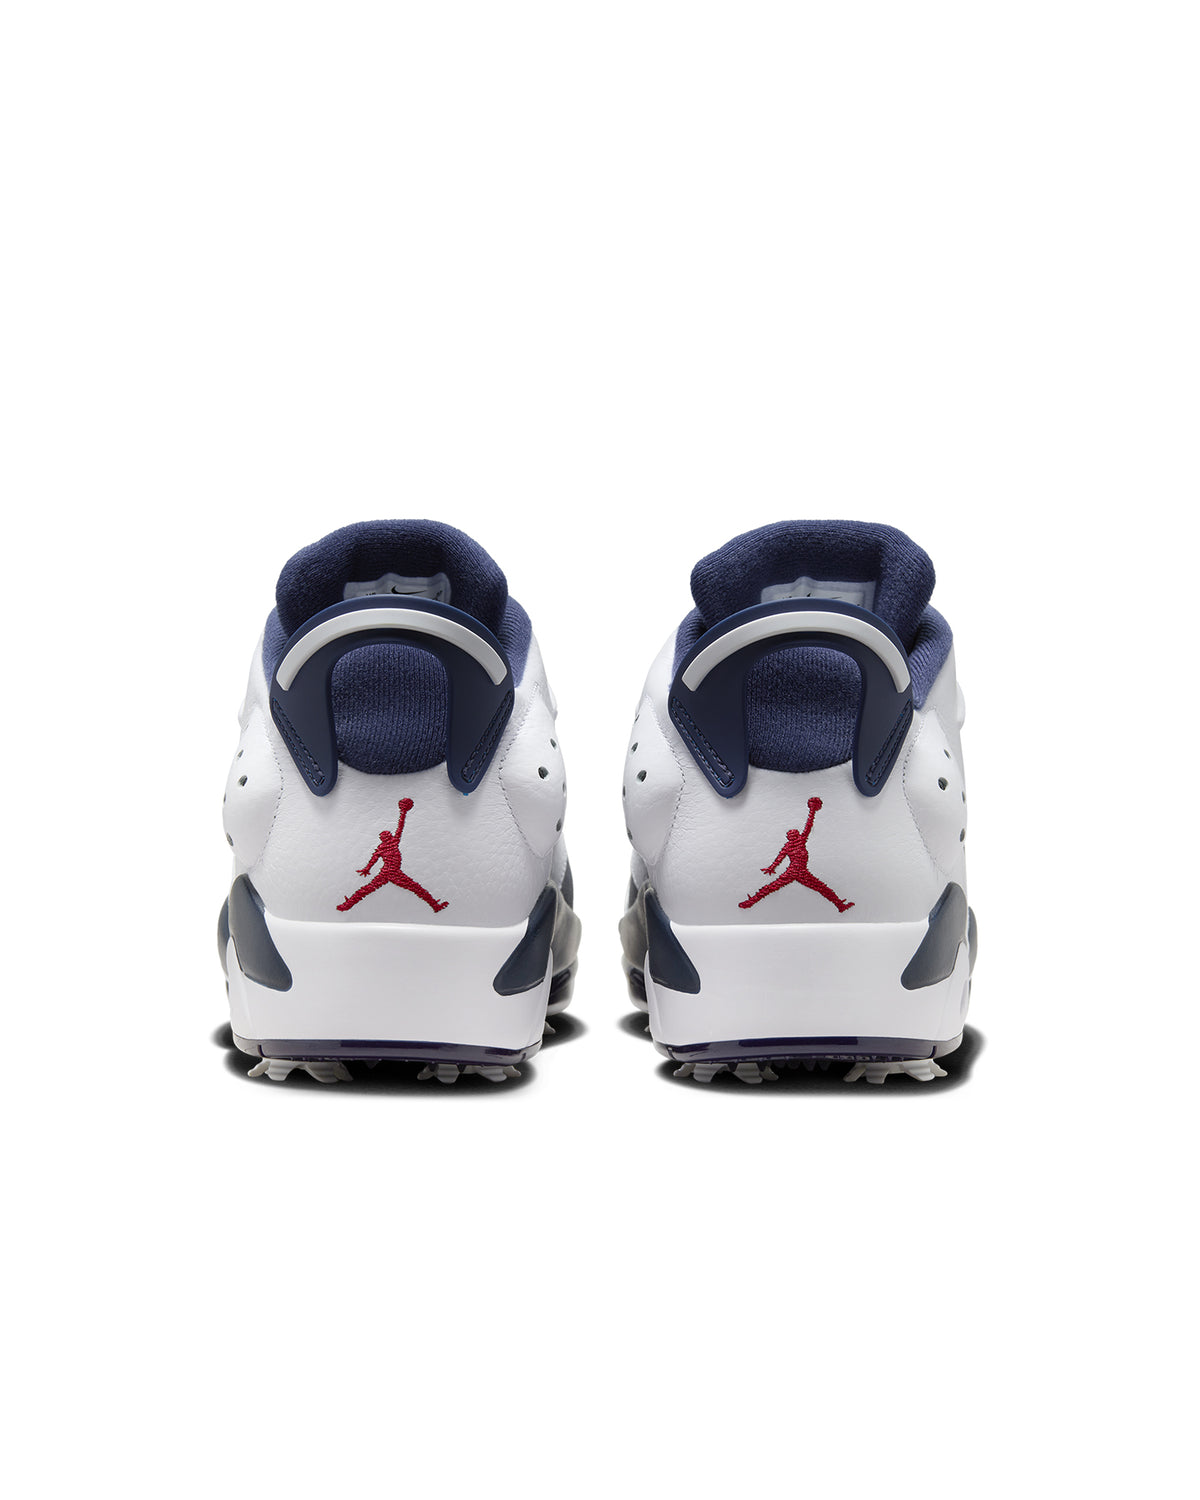 Air Jordan 6 Low Golf “Olympic” – Eastside Golf